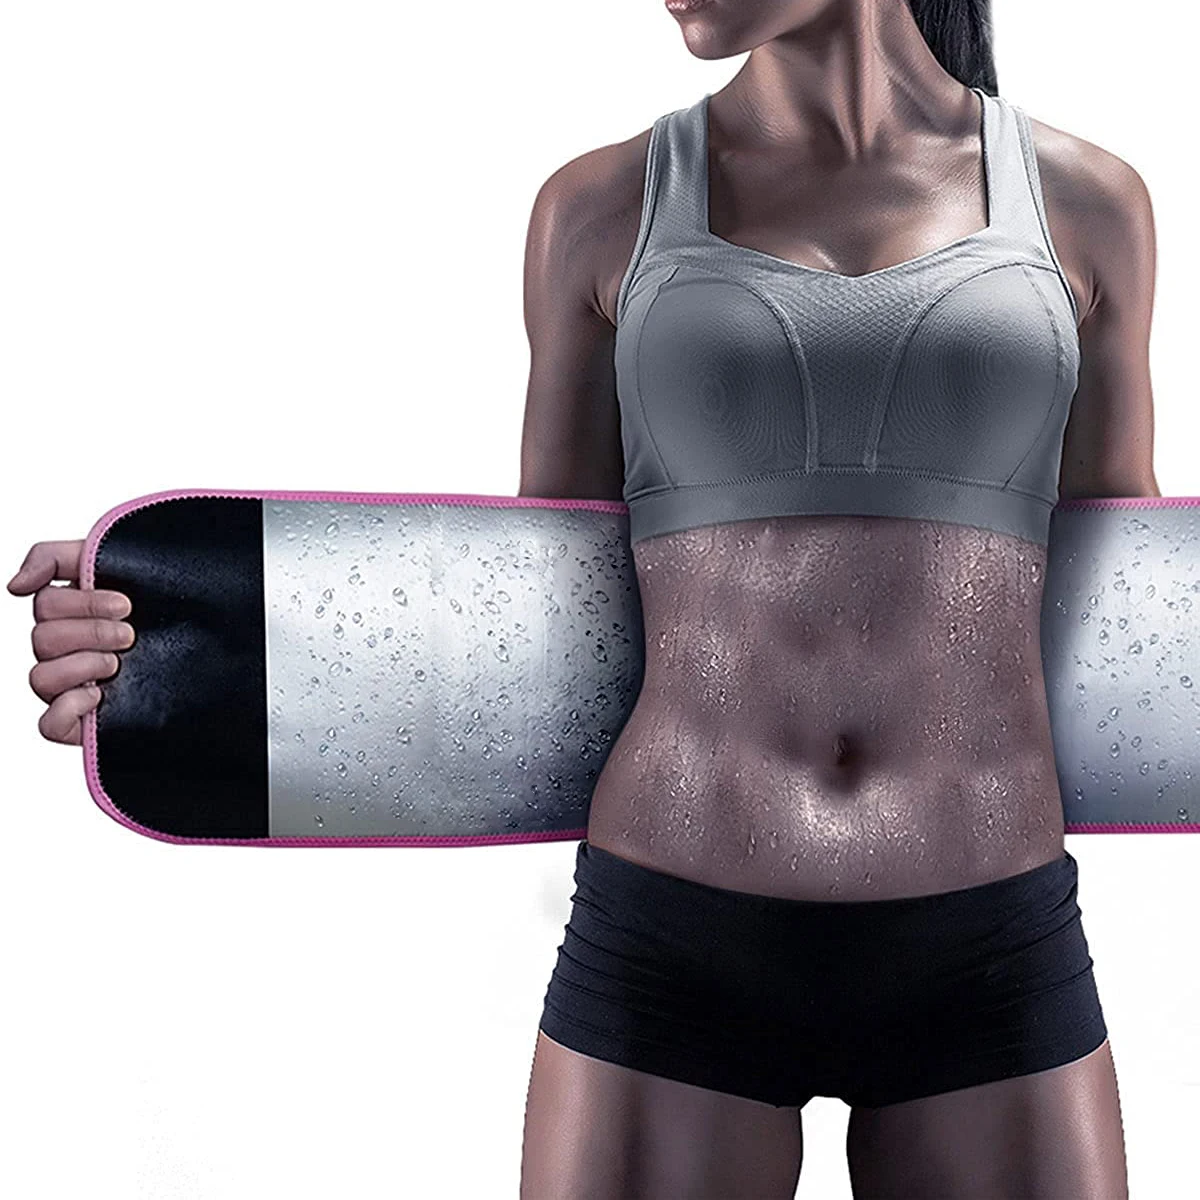 

Hot Ladies Neoprene Slimming Sweat Belly Band Weight Loss Waist Trainer Trimmer Belt